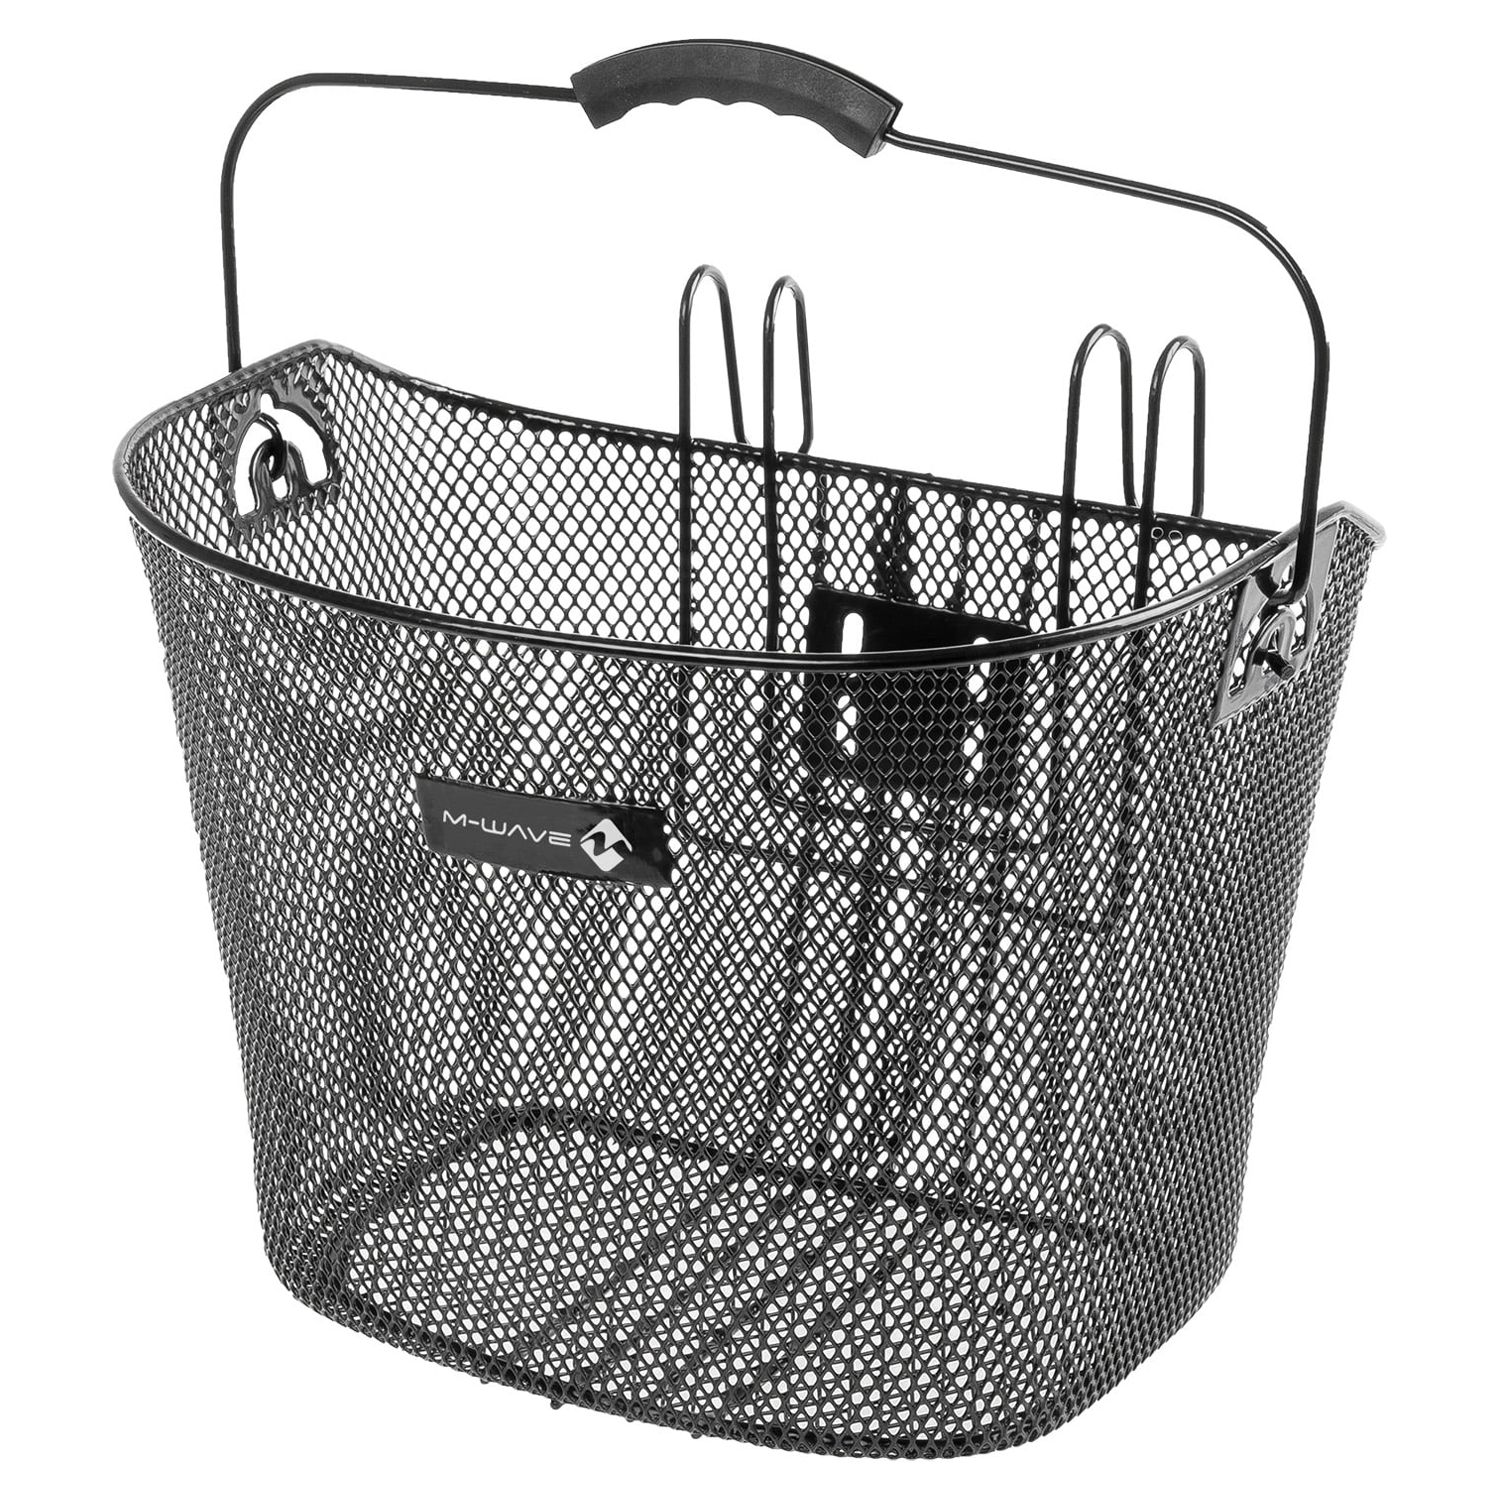 M-Wave Quick Mount Wire Basket, Black, 18.5 Liters - image 1 of 5